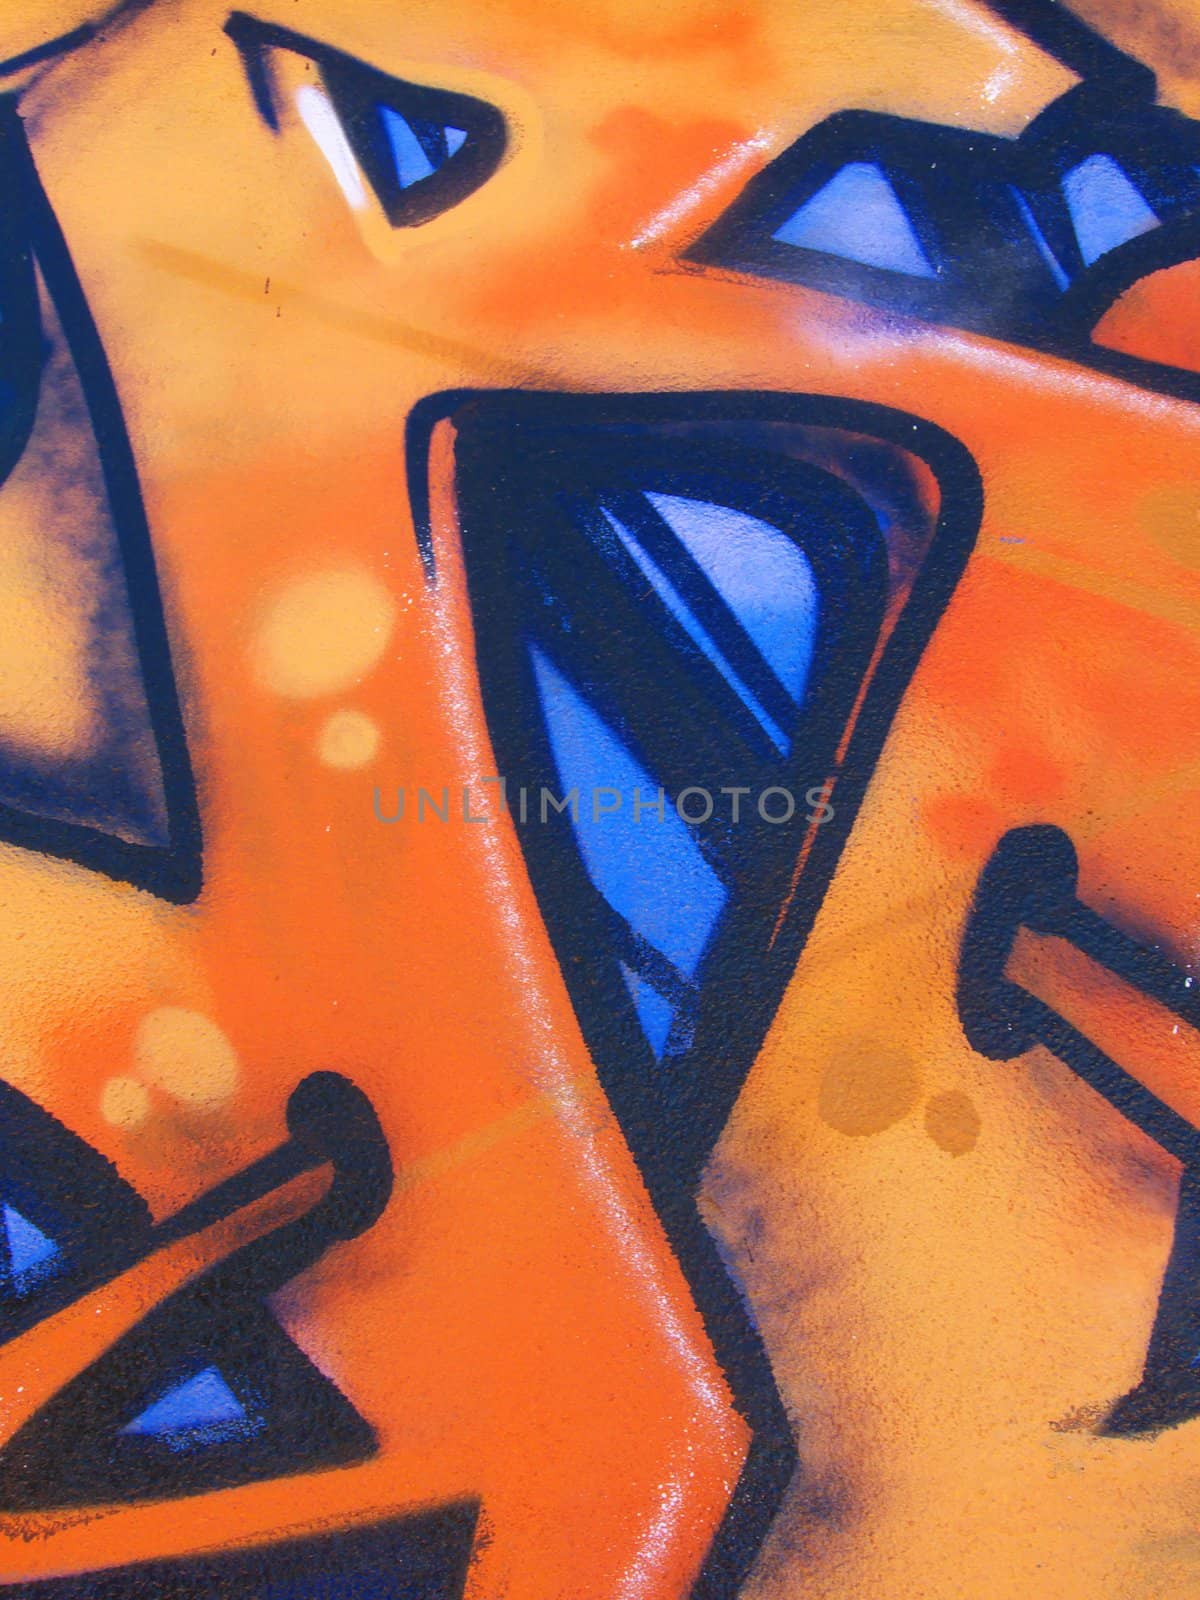 a close-up image of a blue and orange graffiti